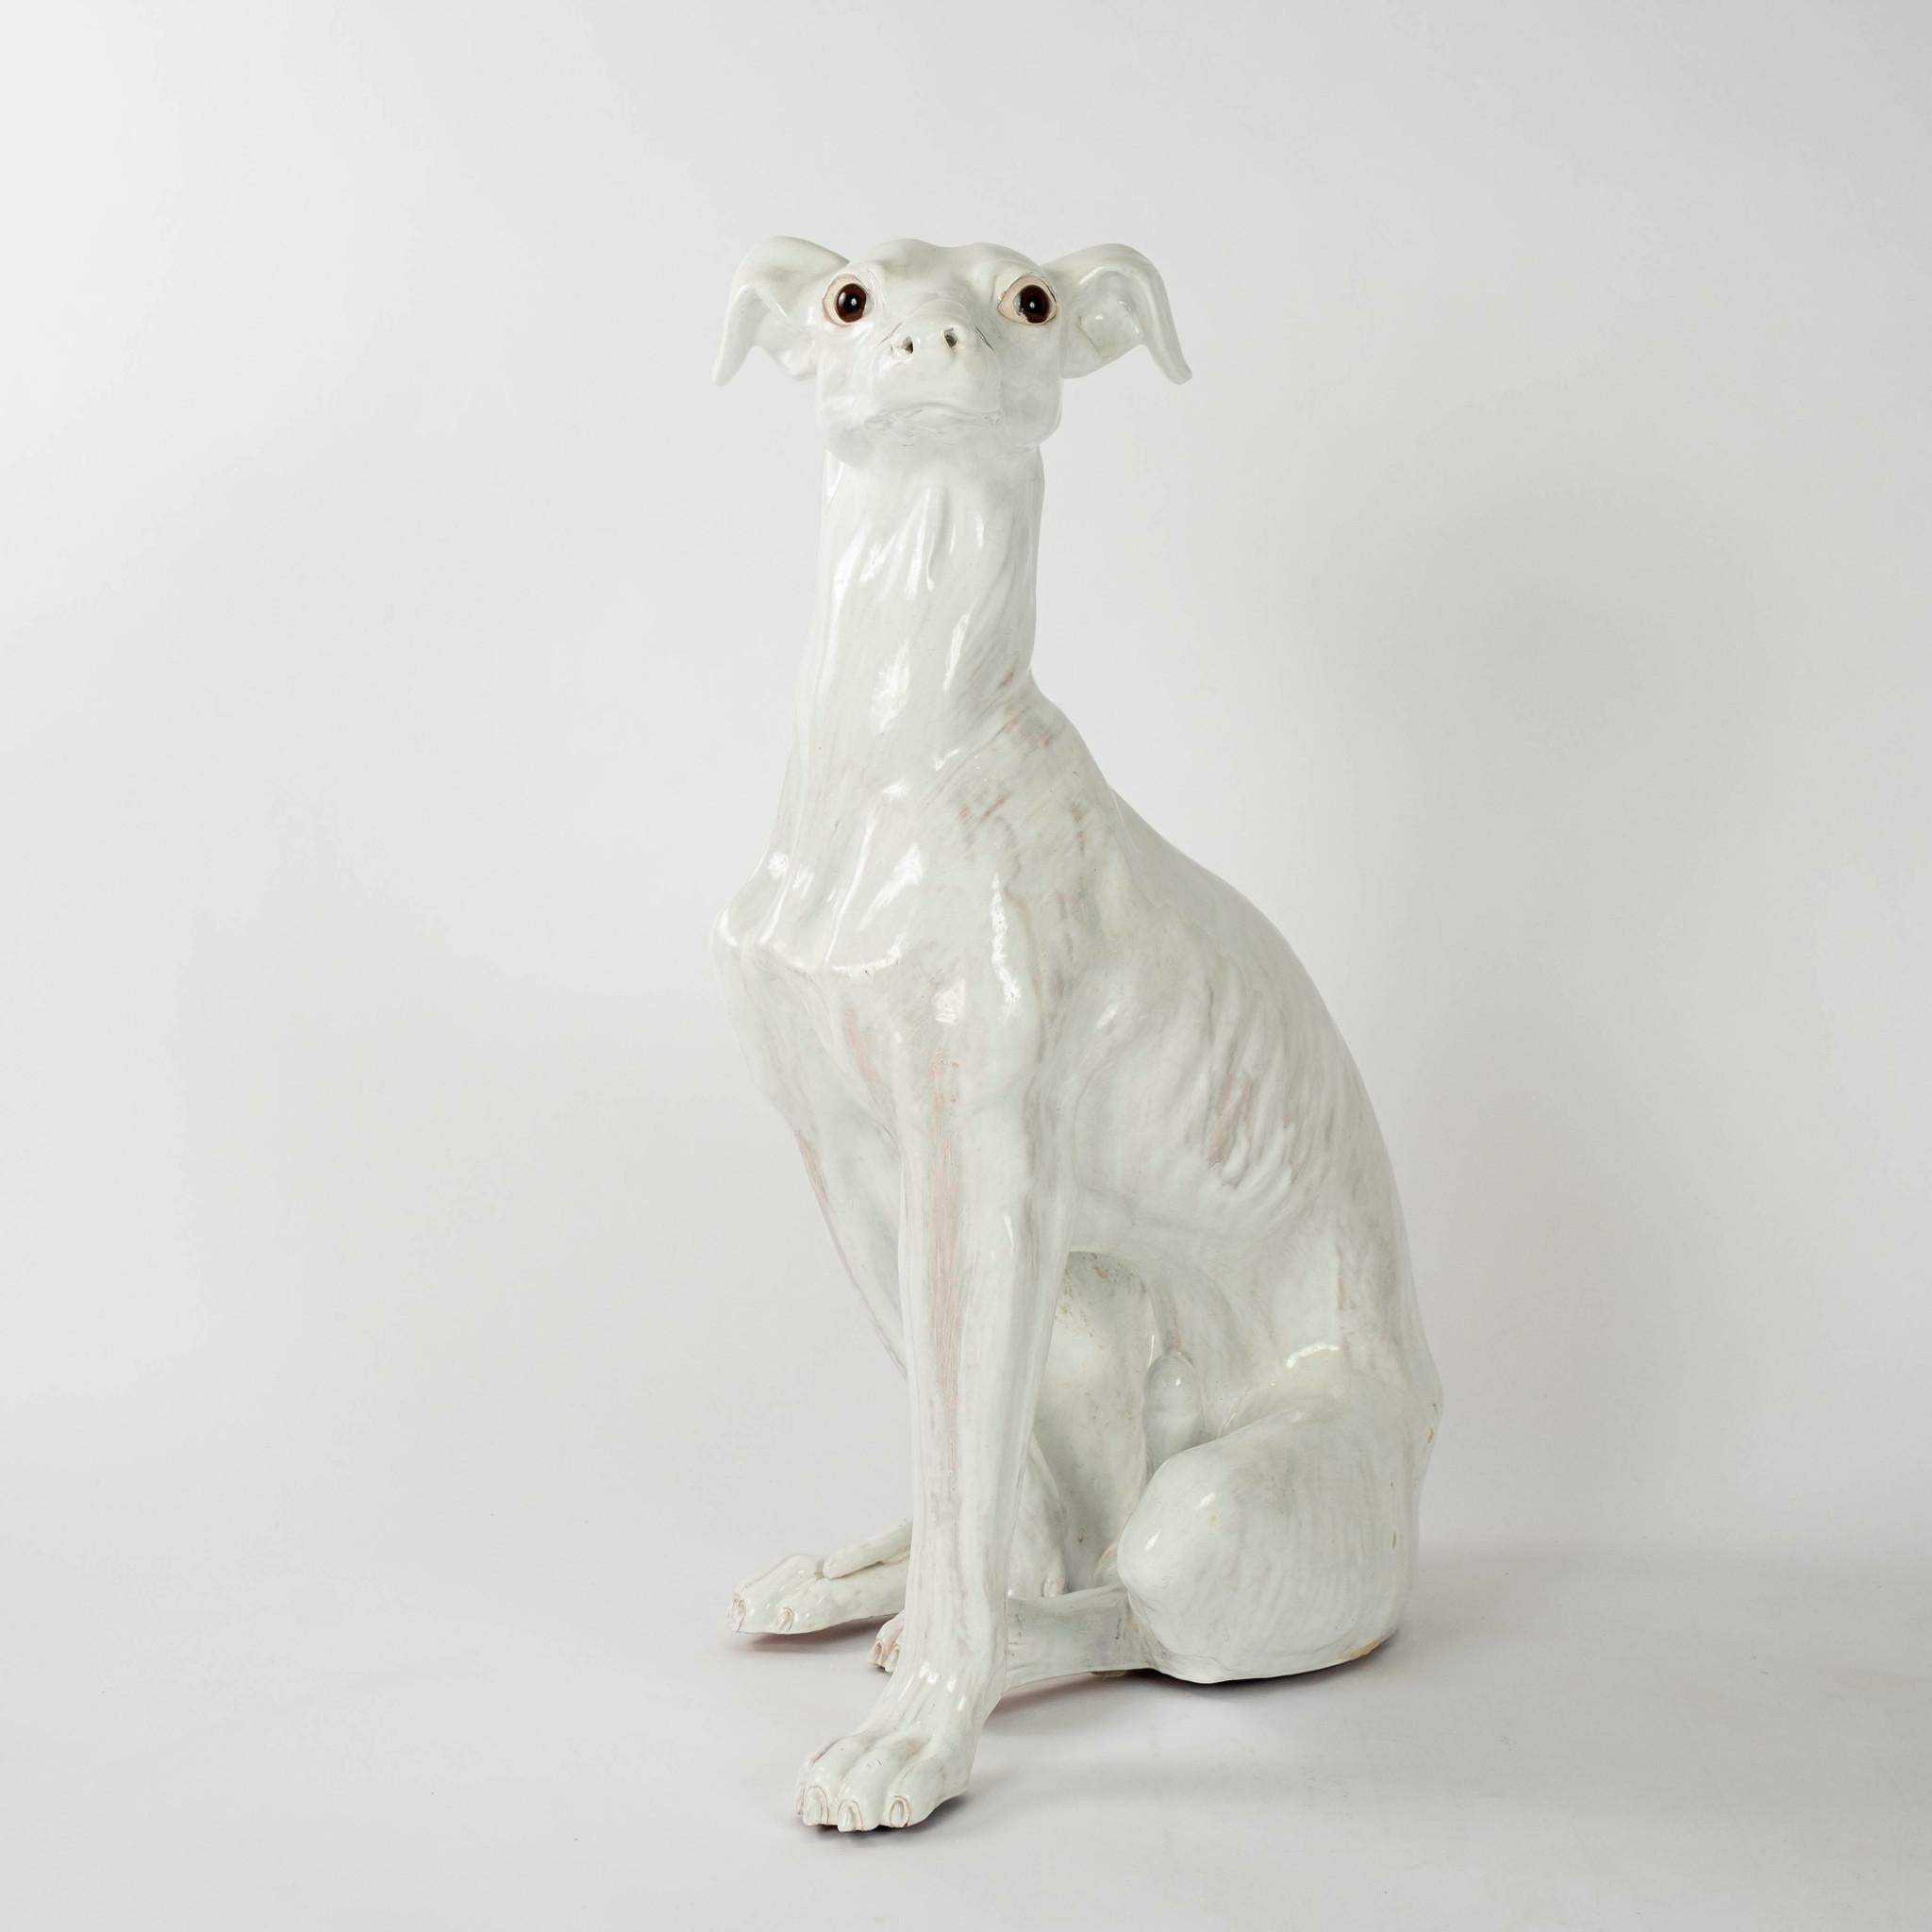 Mid 20th century classic Italian Majolica greyhound dog figure.